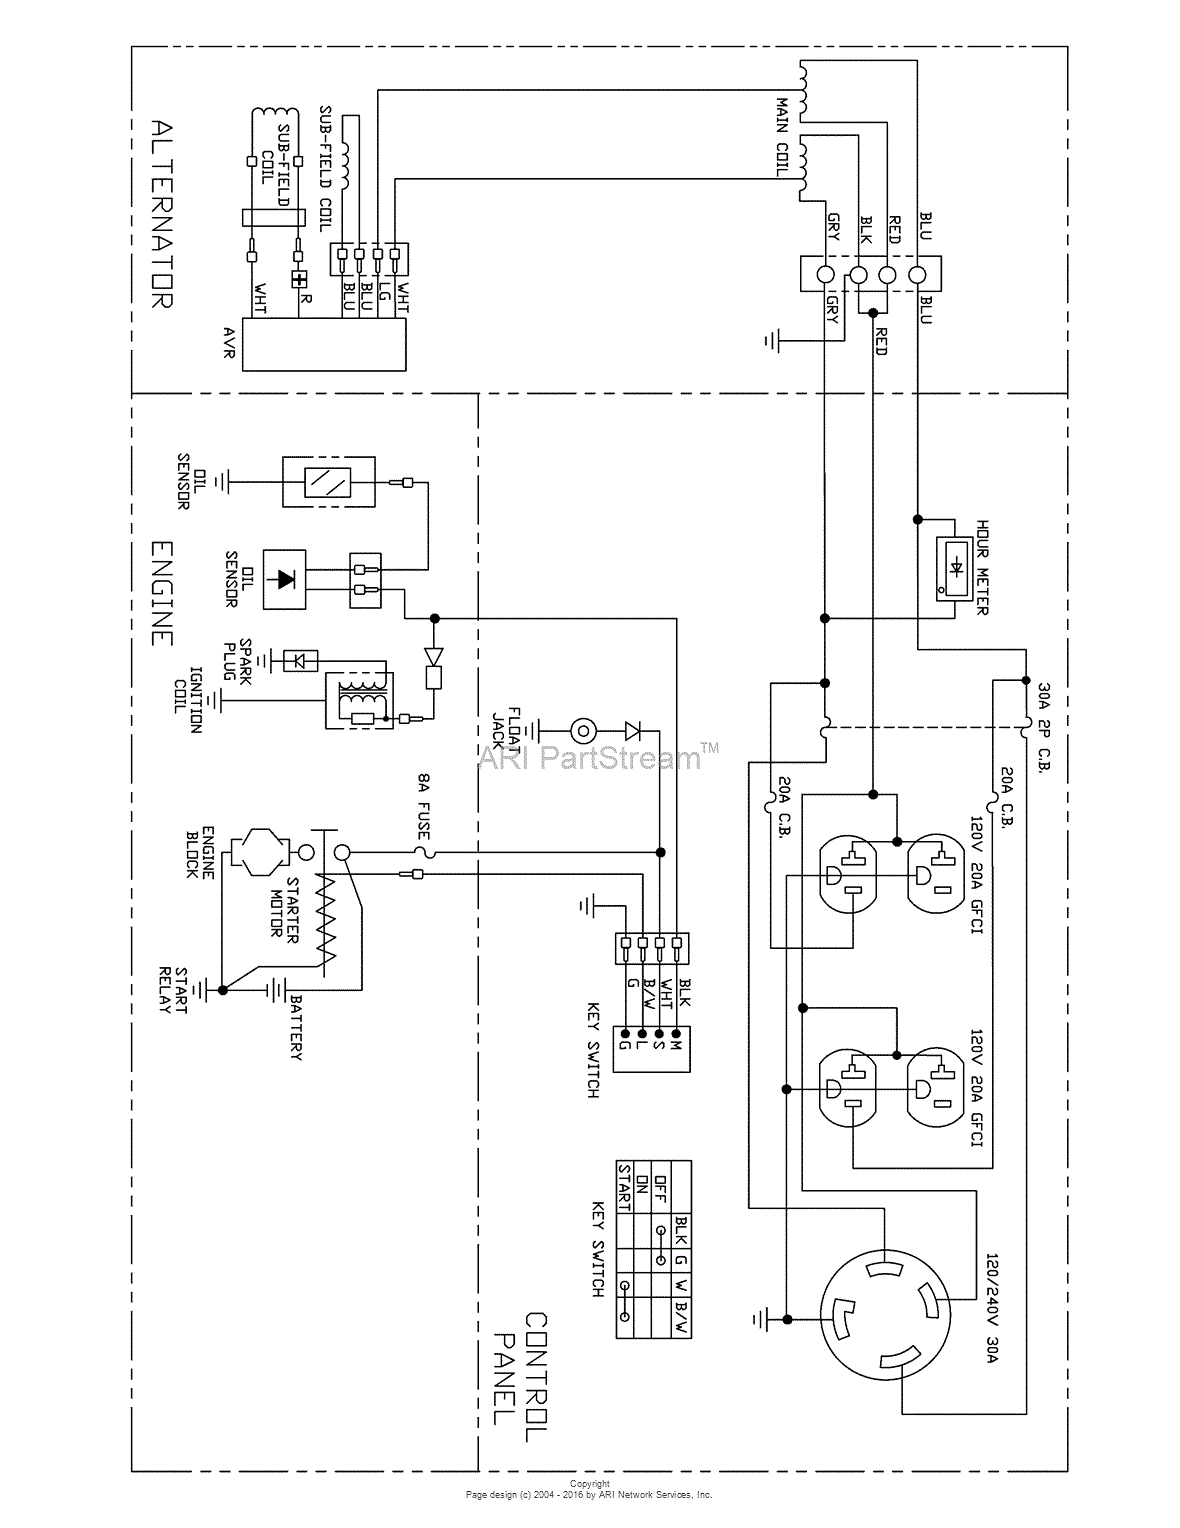 briggs and stratton pro 8000 generator control panel wiring diagram